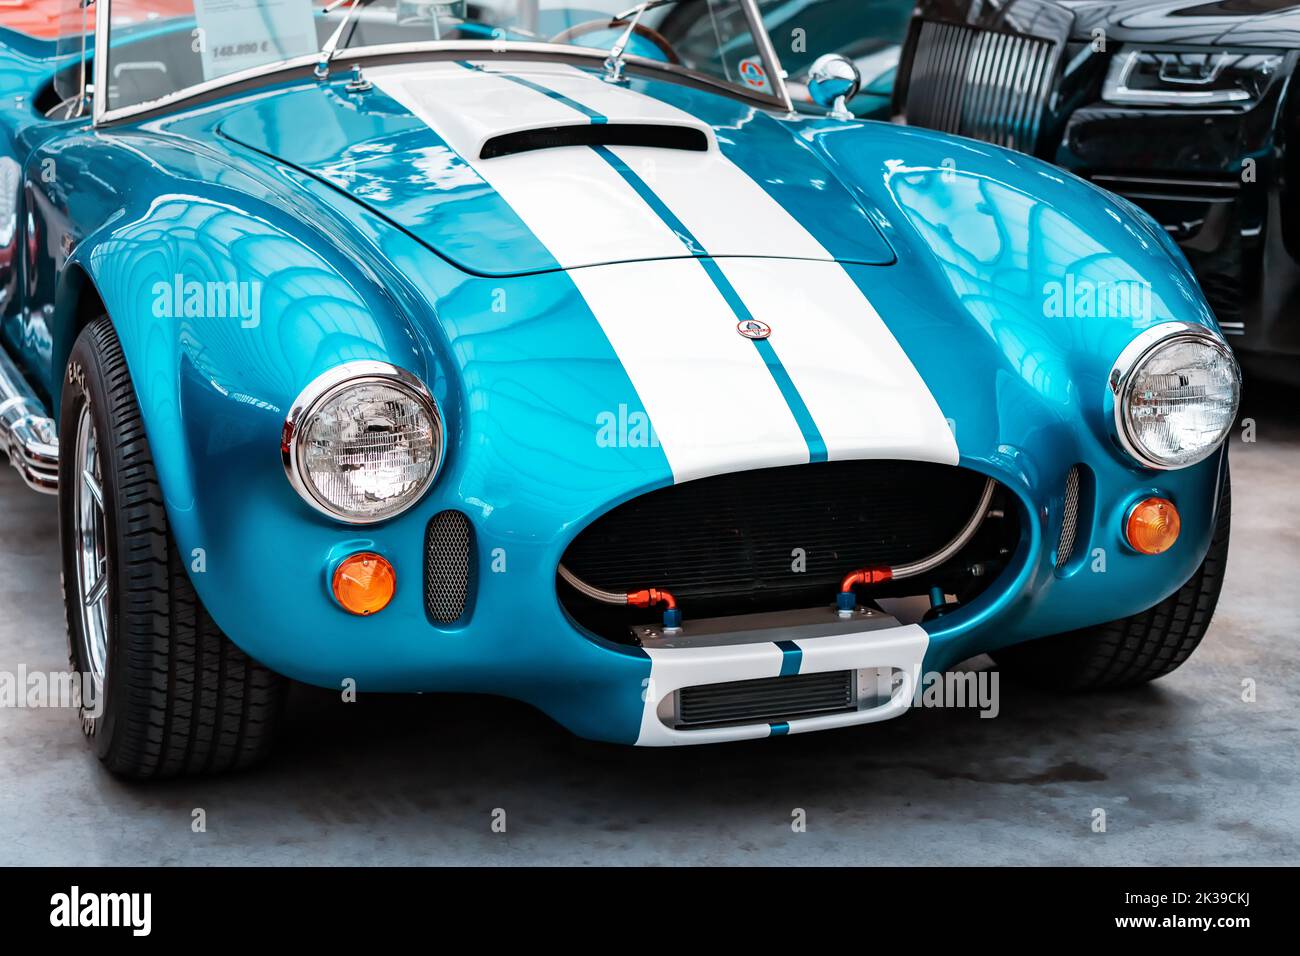 21 July 2022, Dusseldorf, Germany: Powerful Cobra retro racing car at museum exhibition Stock Photo